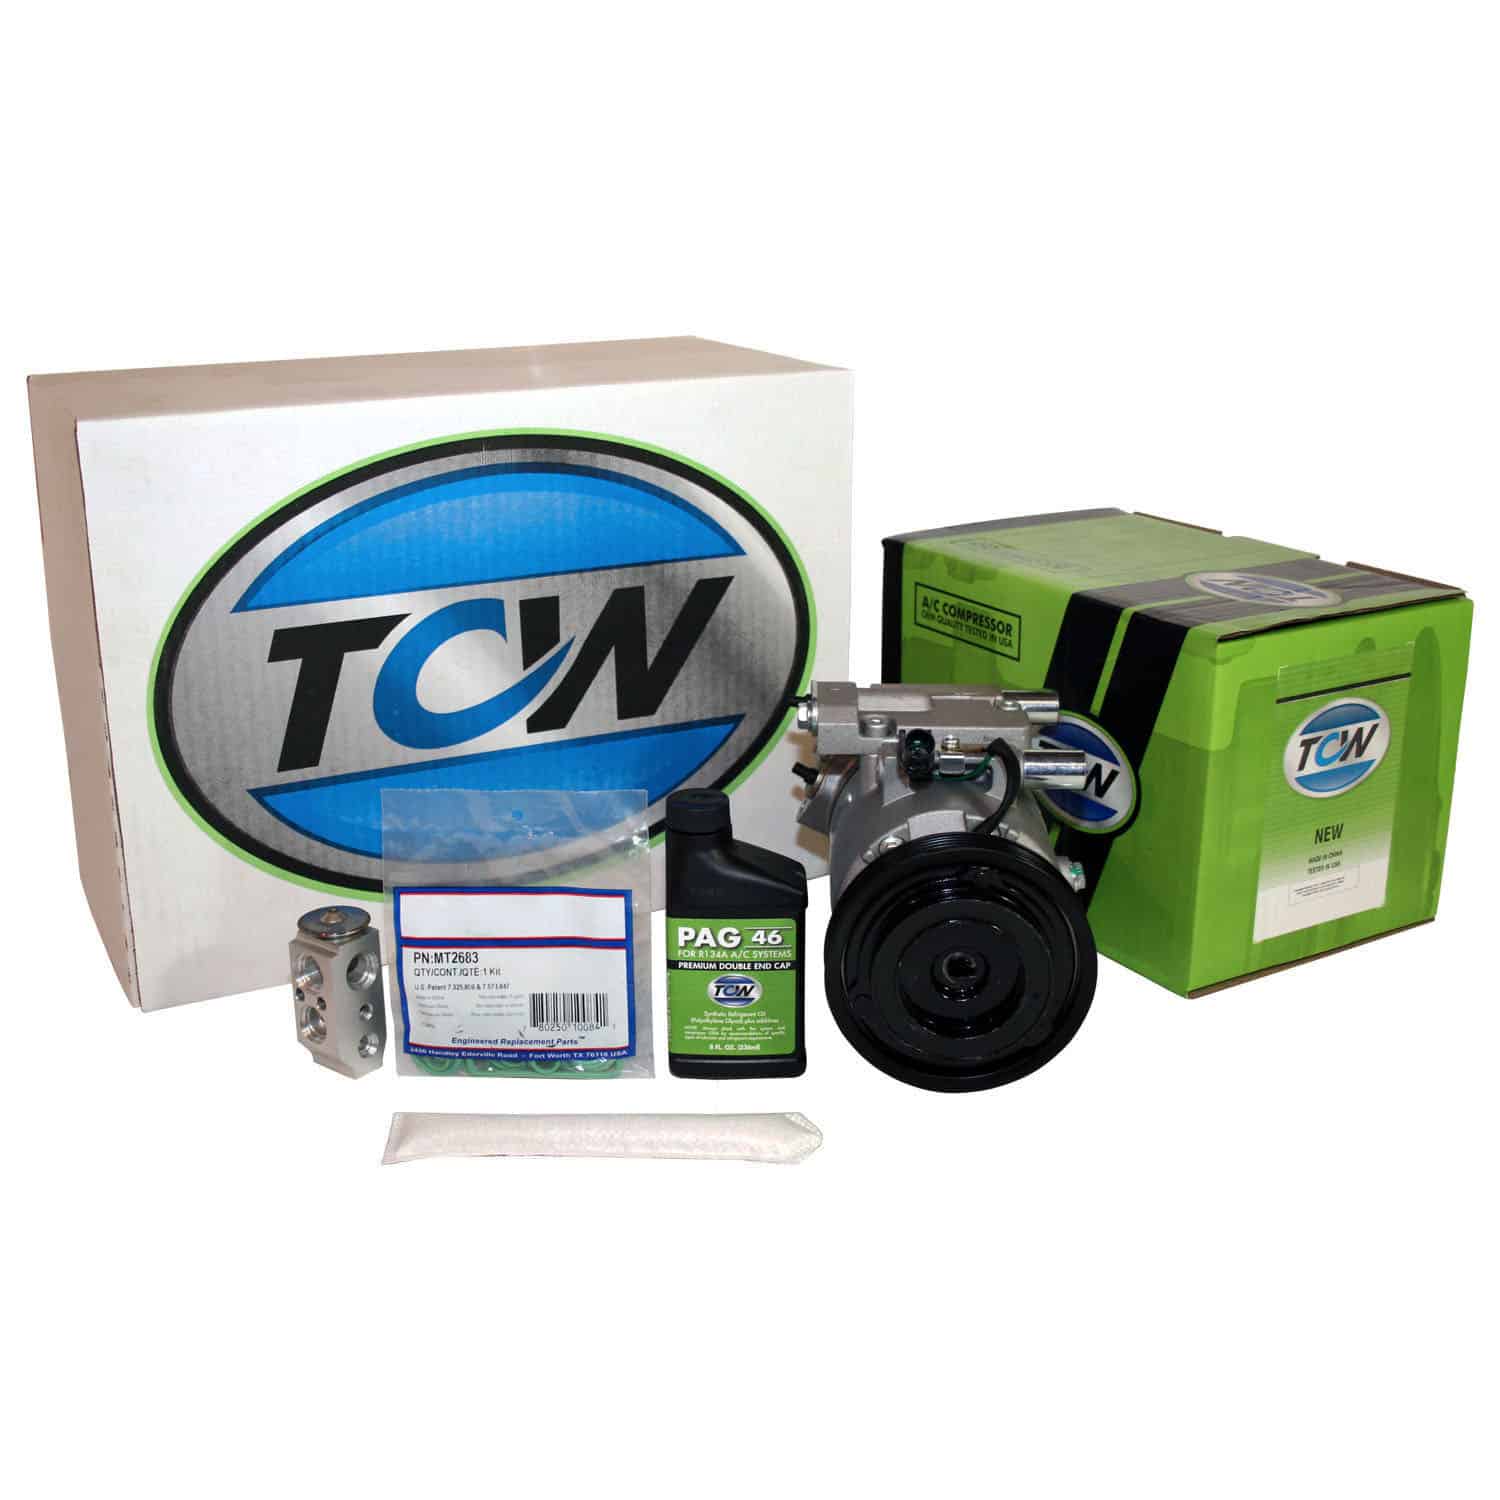 TCW Vehicle A/C Kit K1000413N New Product Image field_60b6a13a6e67c